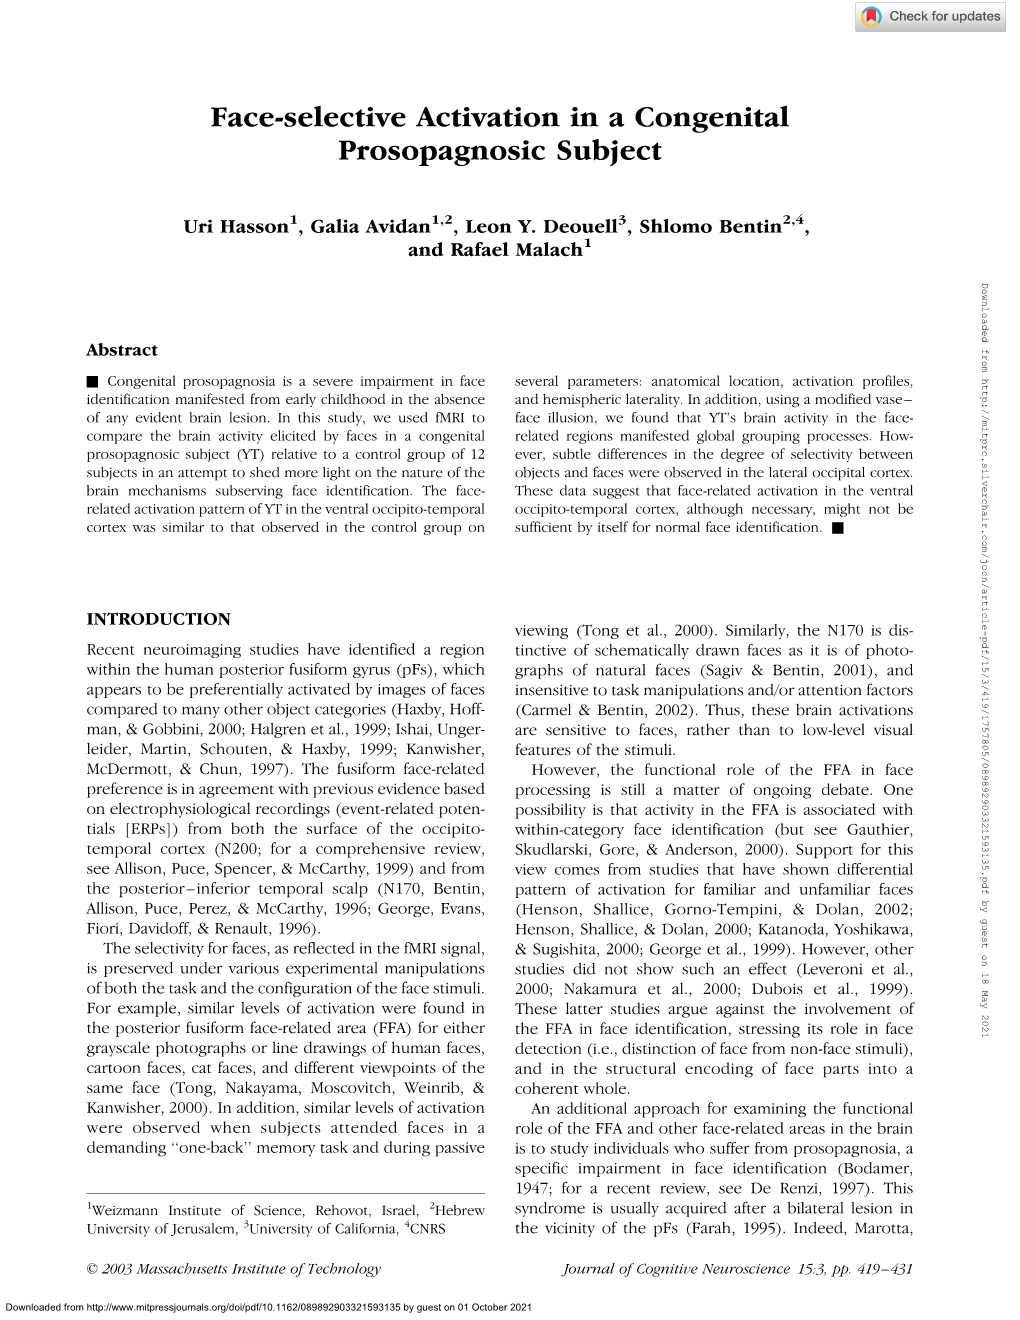 Face-Selective Activation in a Congenital Prosopagnosic Subject